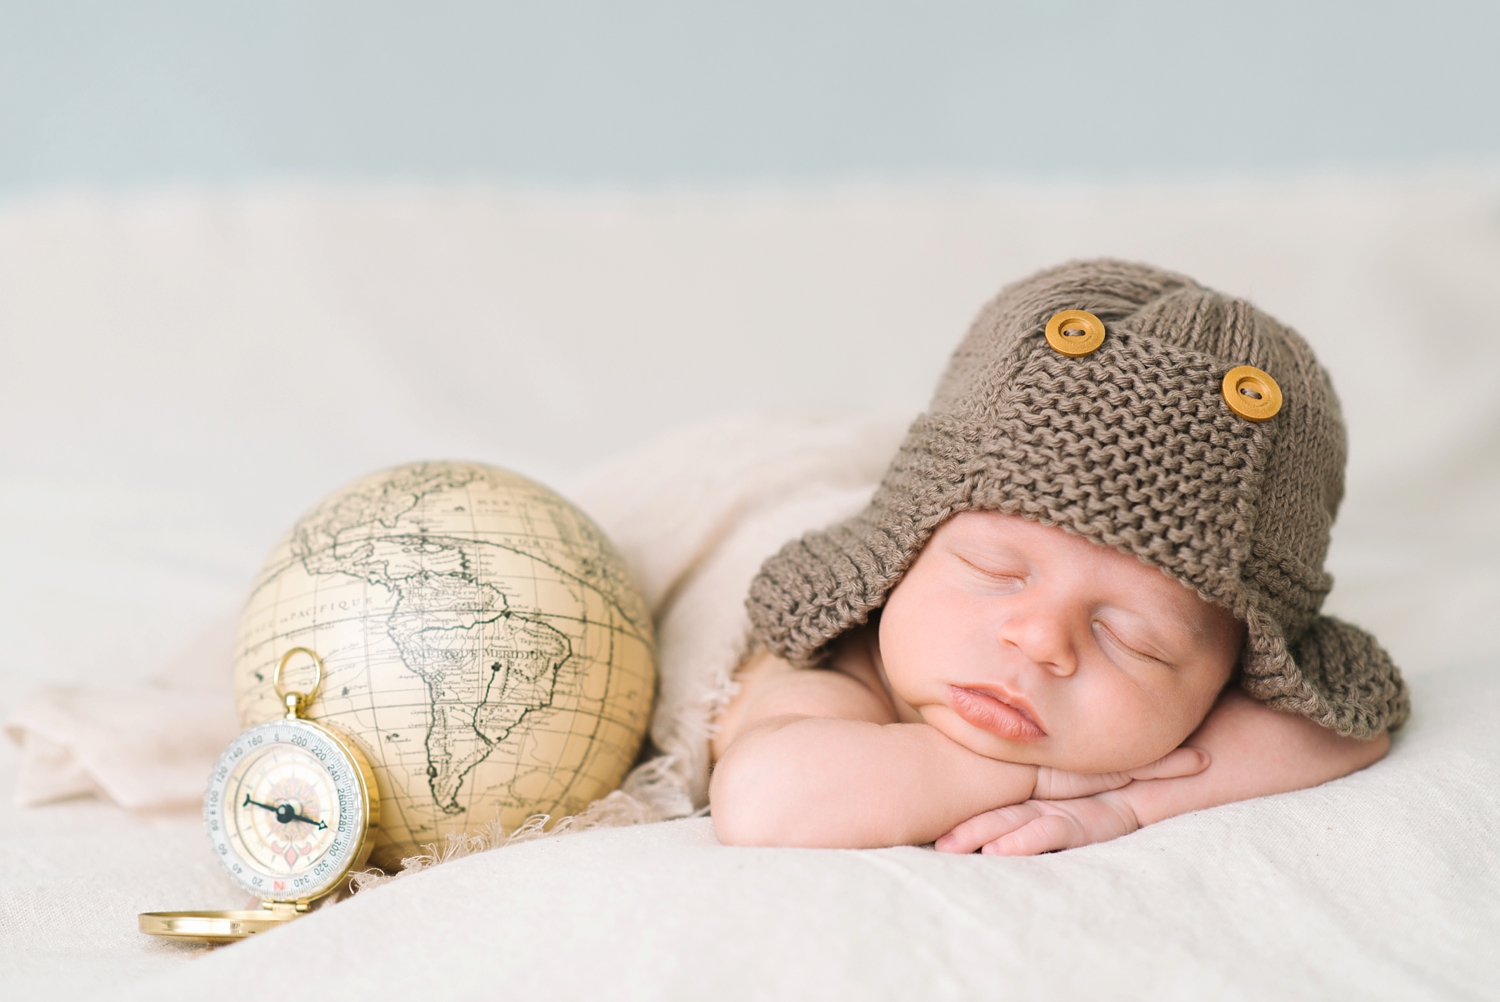 baby-boy-aviator-hat-globe-world-traveler-compass-cream-blue-brown-best-newborn-photographer-portland-oregon-shelley-marie-photo-046.jpg